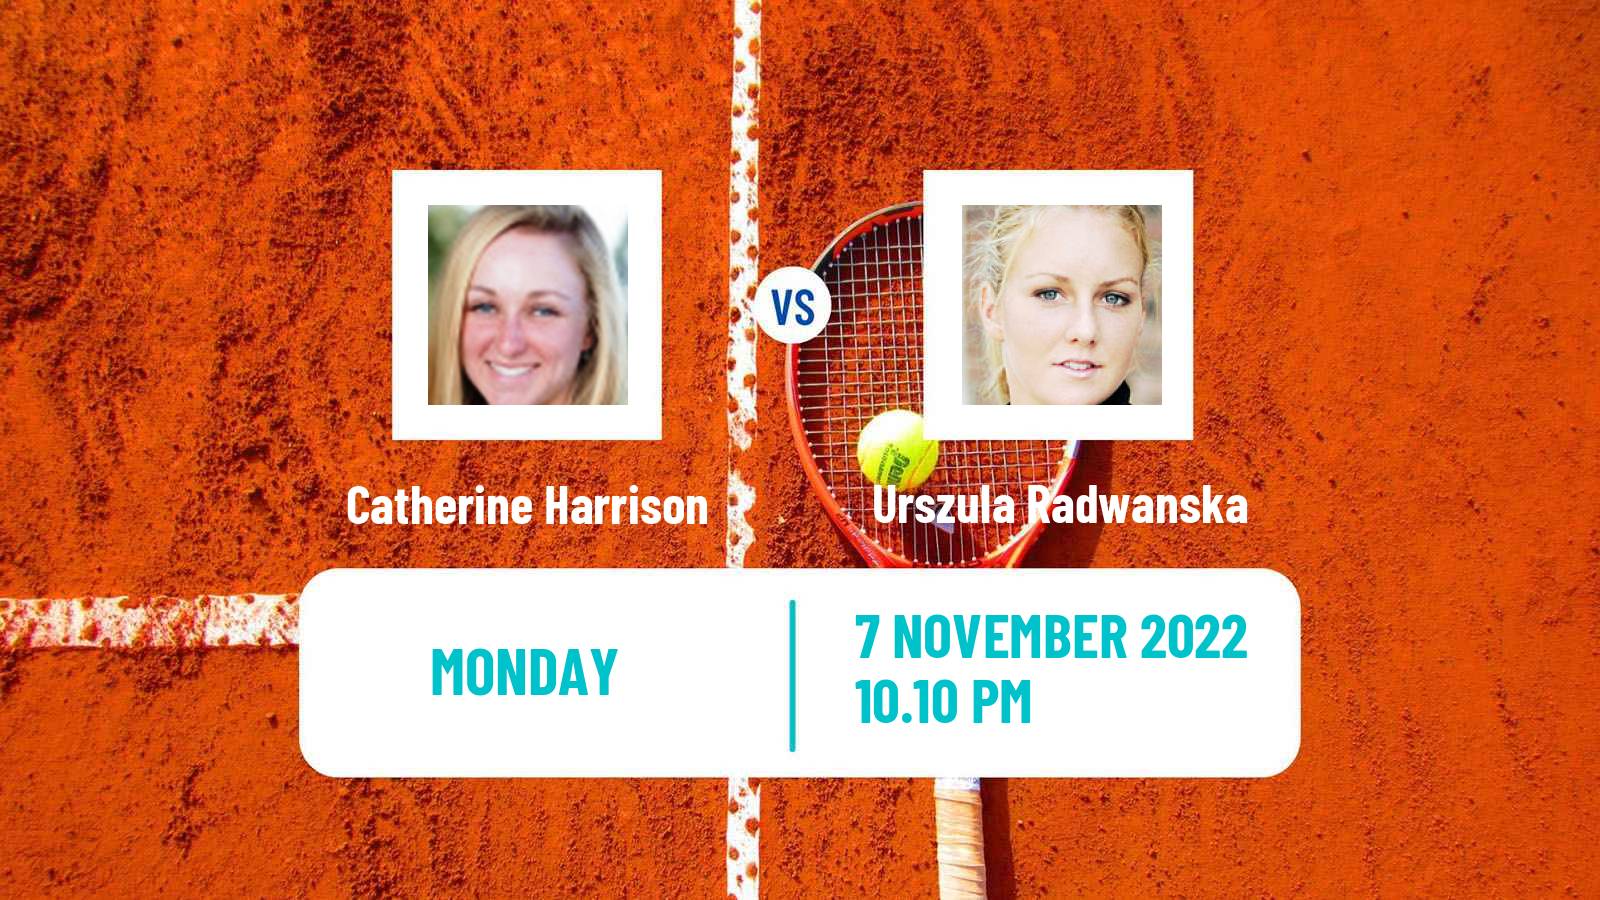 Tennis ITF Tournaments Catherine Harrison - Urszula Radwanska